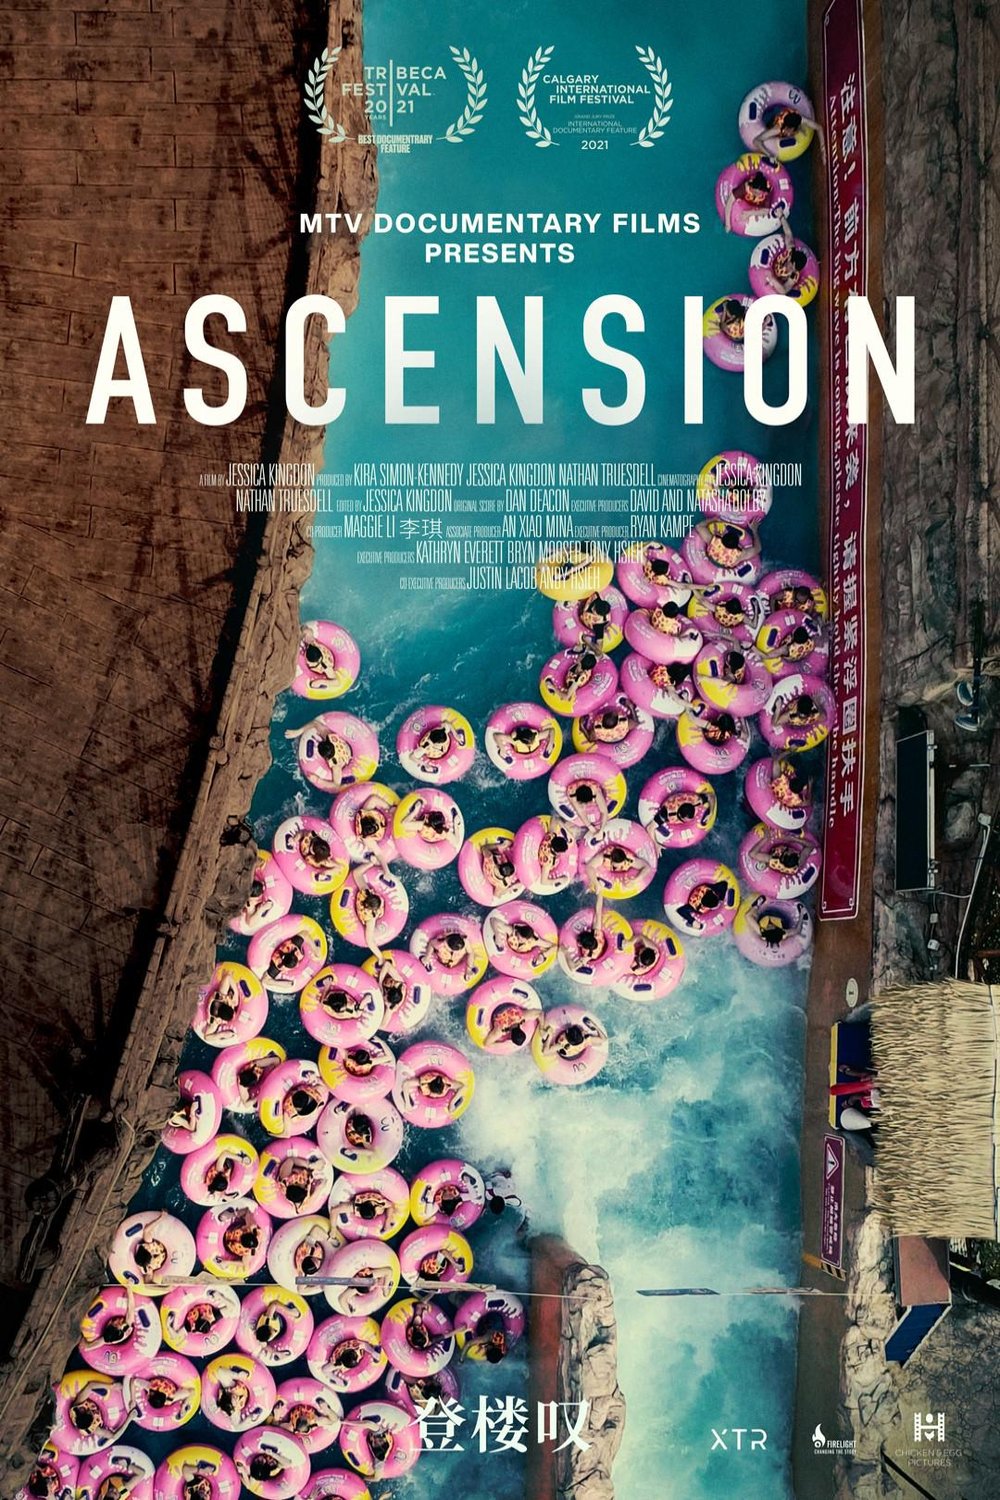 Ascension (2021) by Jessica Kingdon